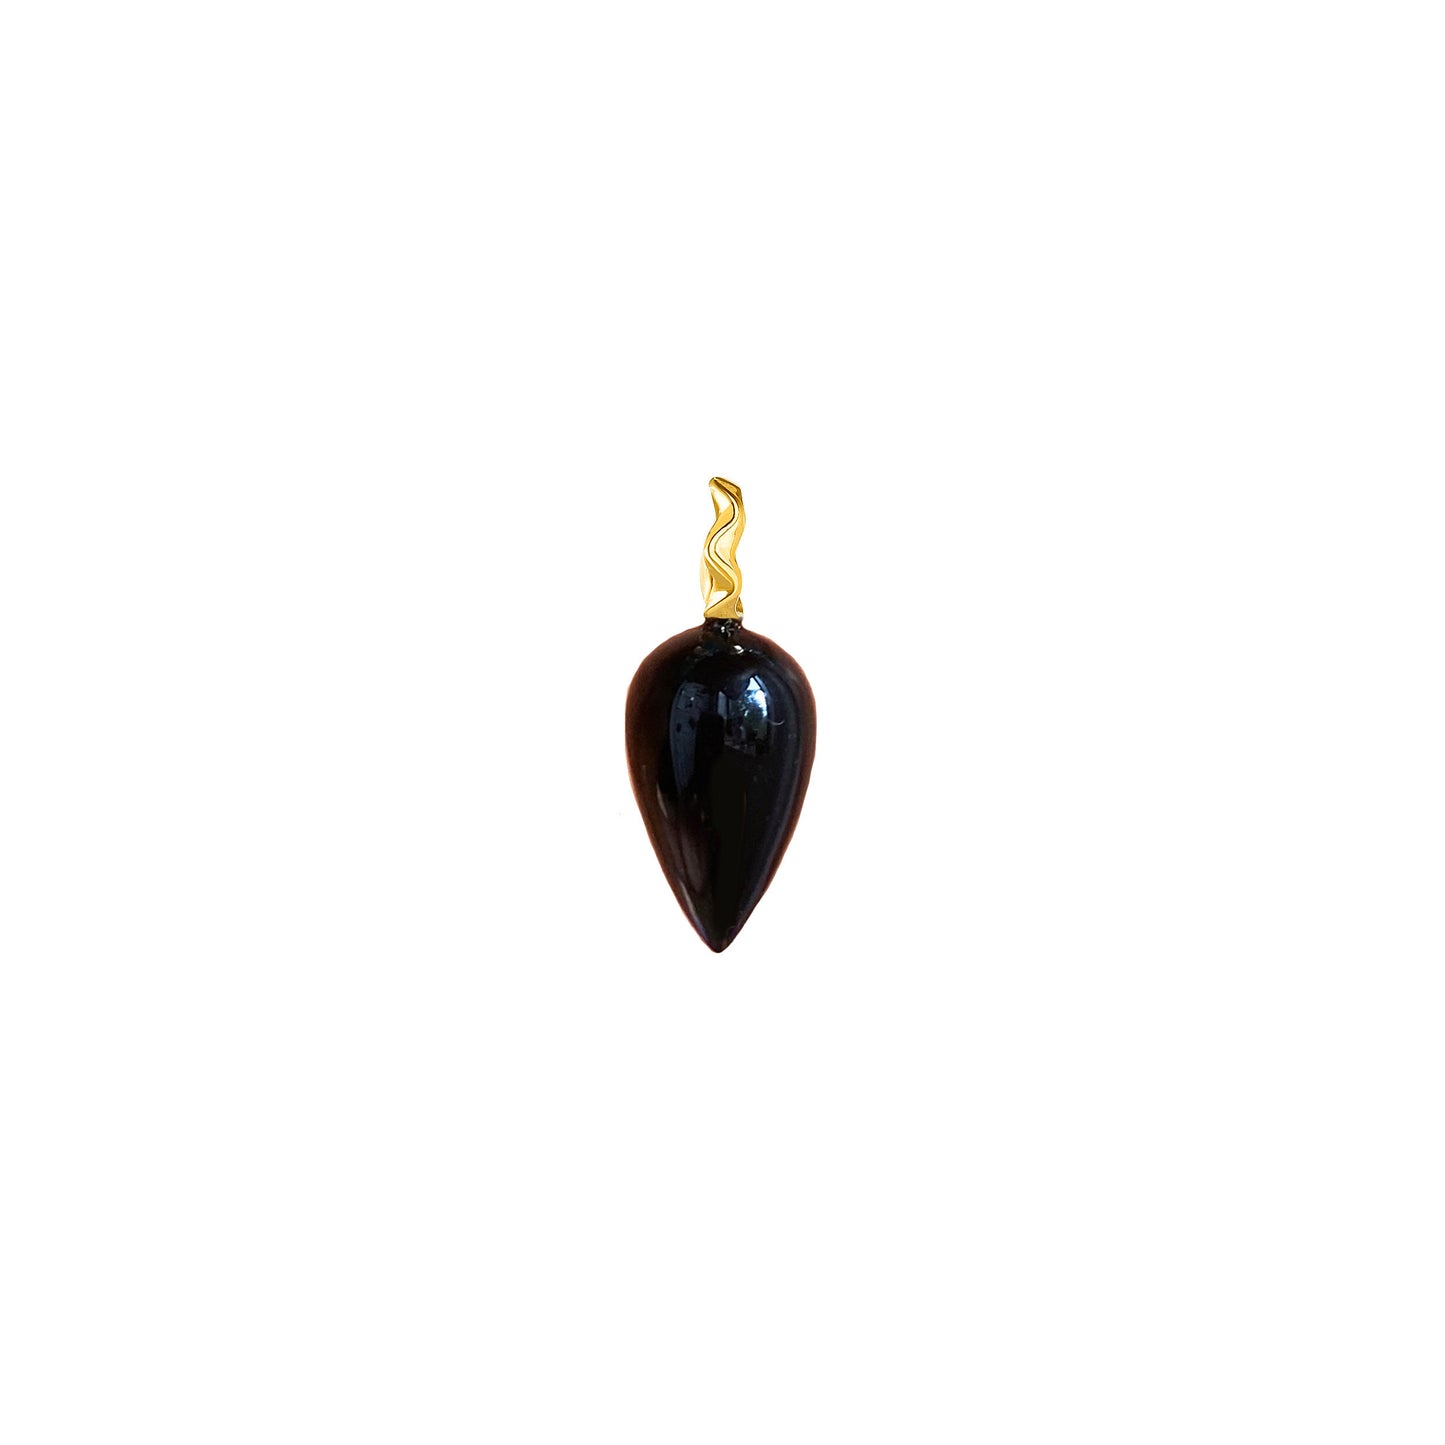 Black agate acorn drop charm with 14k gold bail